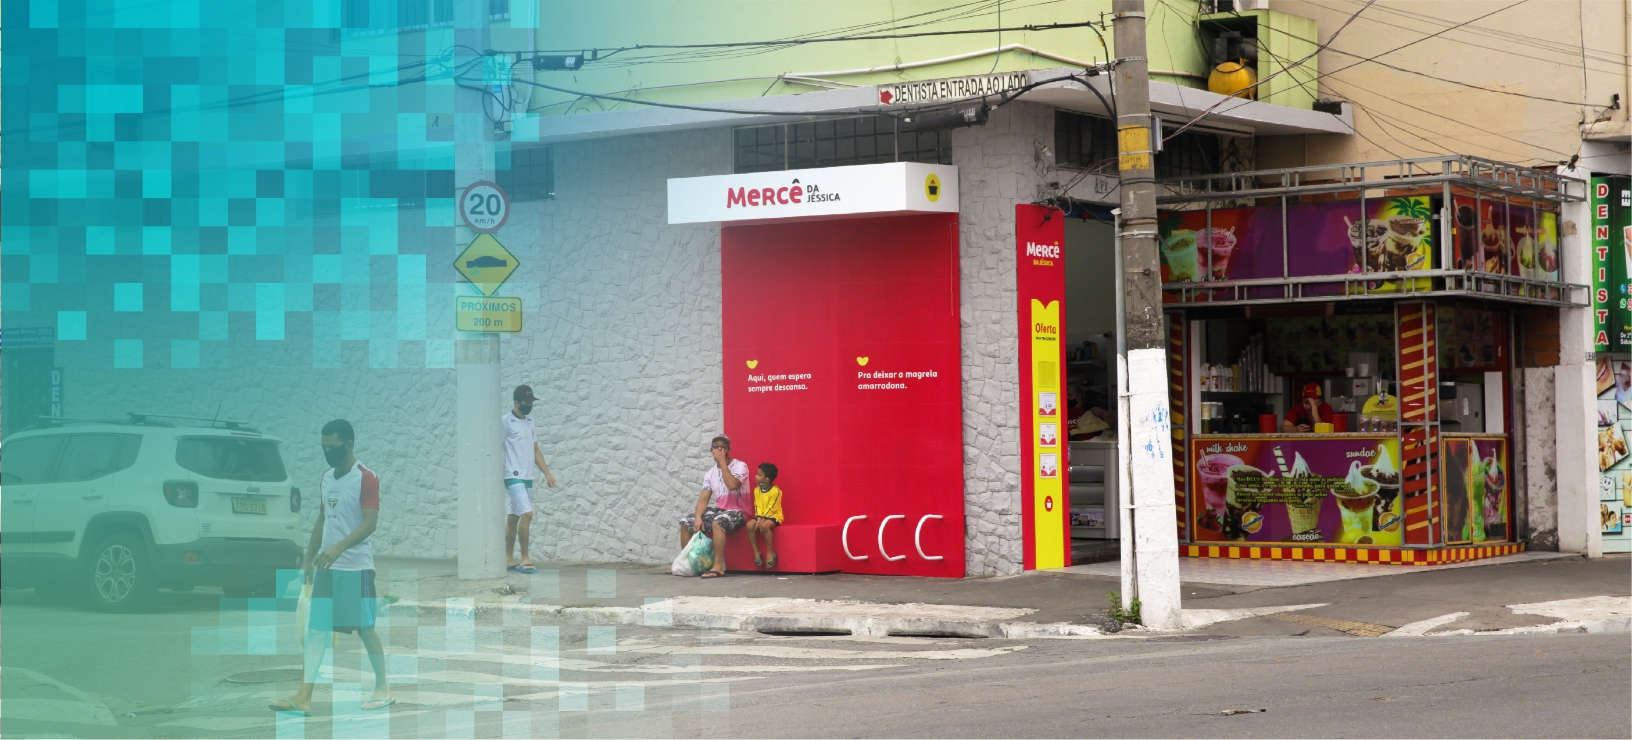 Brazil corner shop